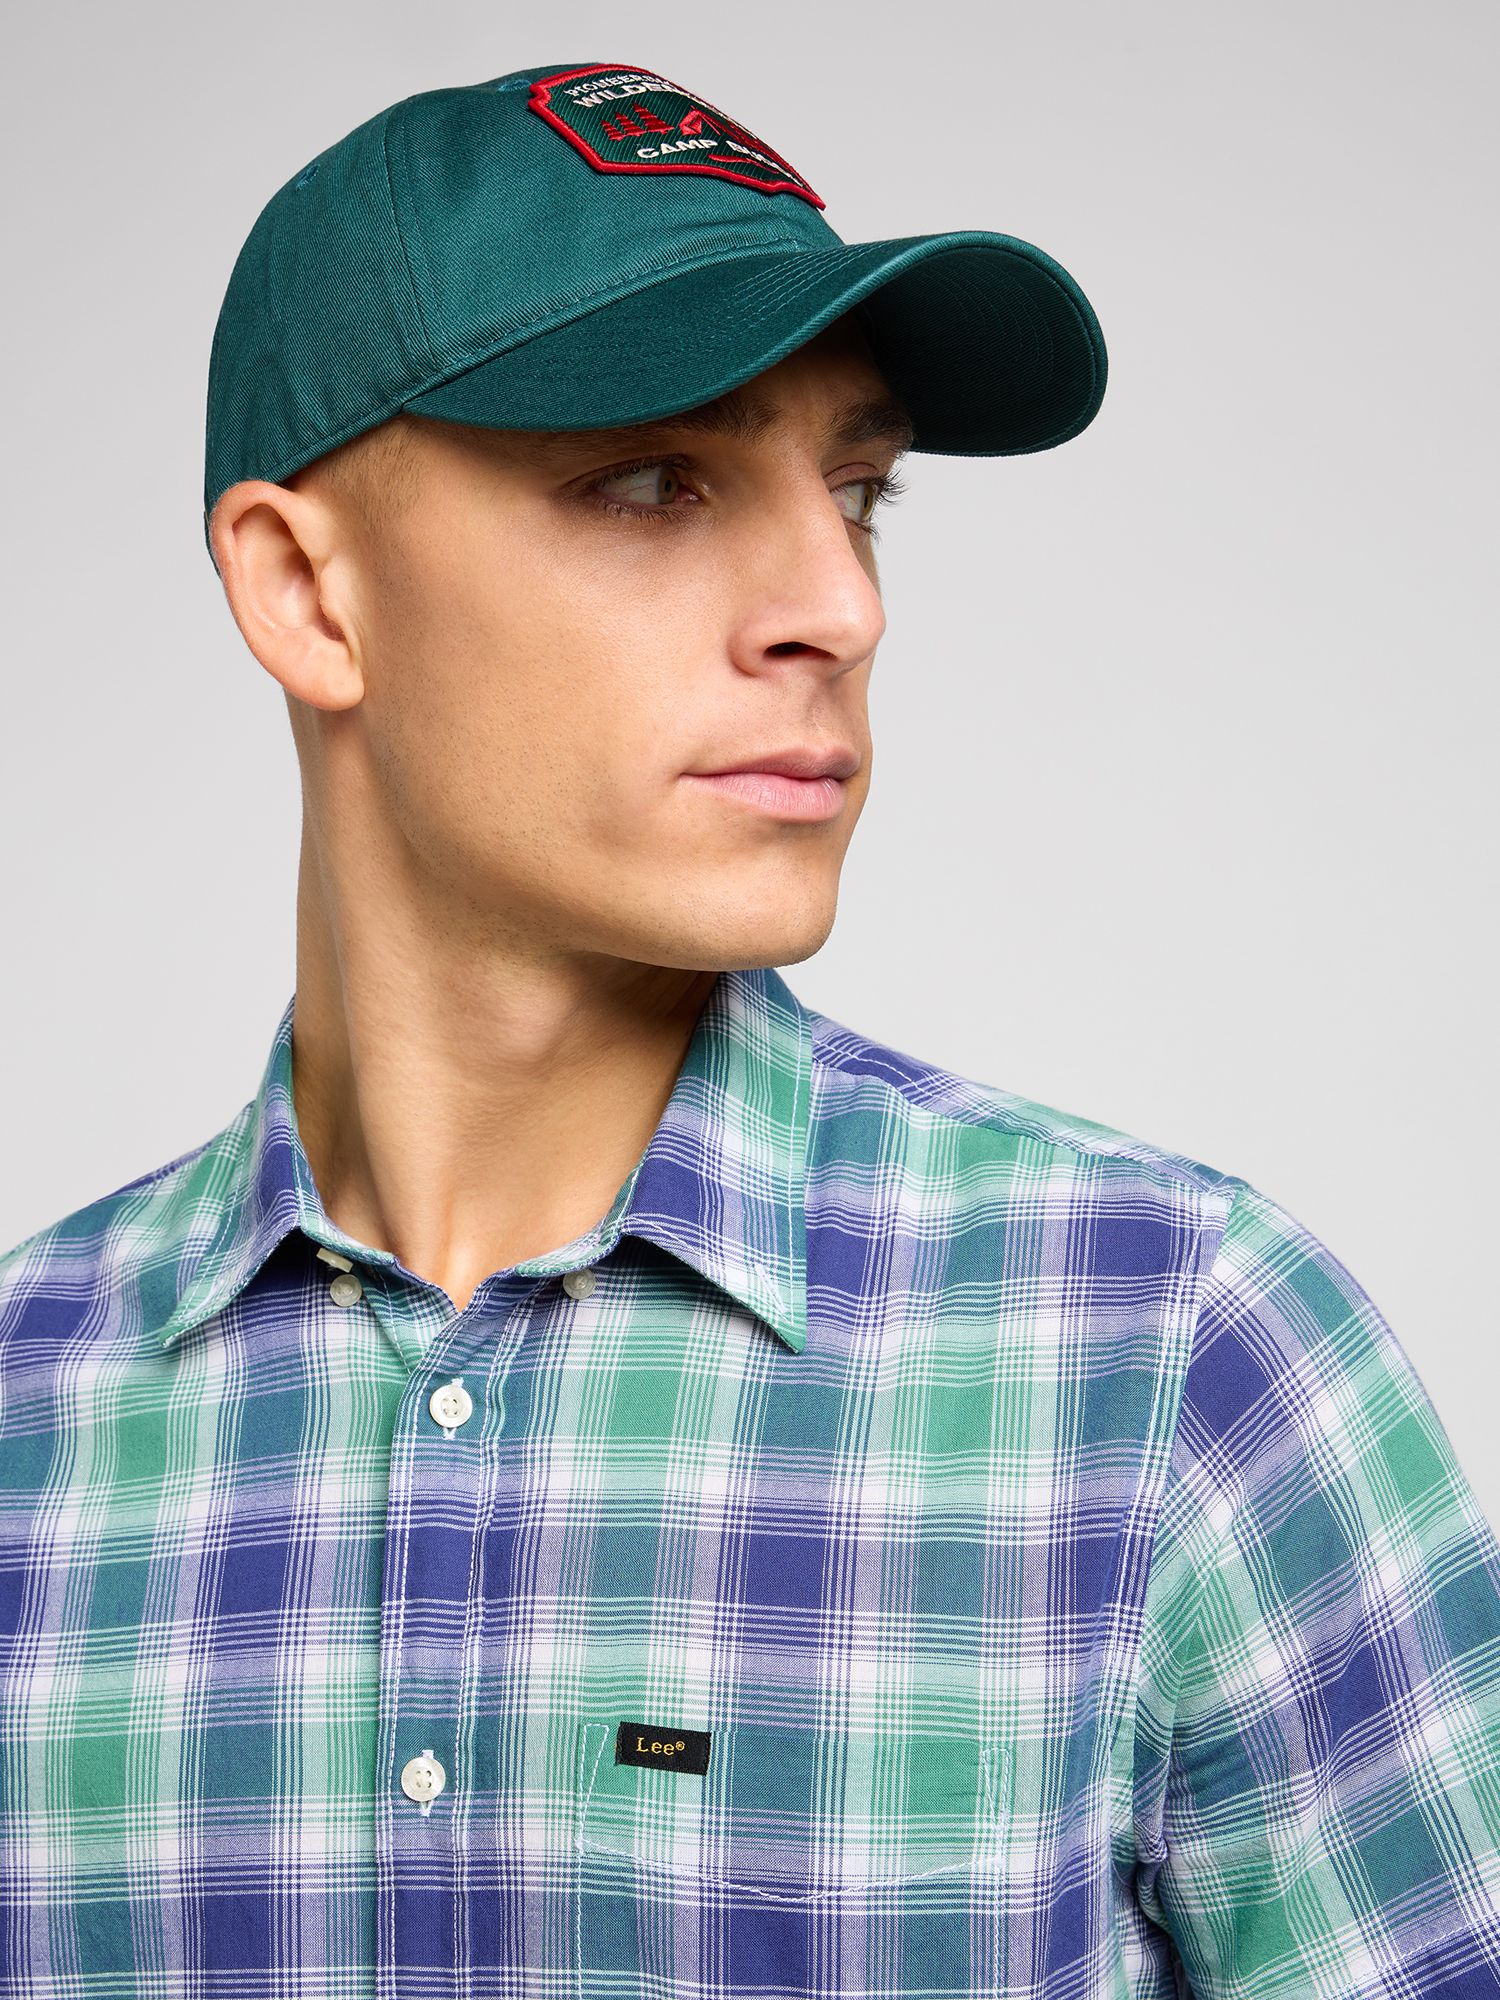 Buy Lee Workwear Cap, Green Online at johnlewis.com